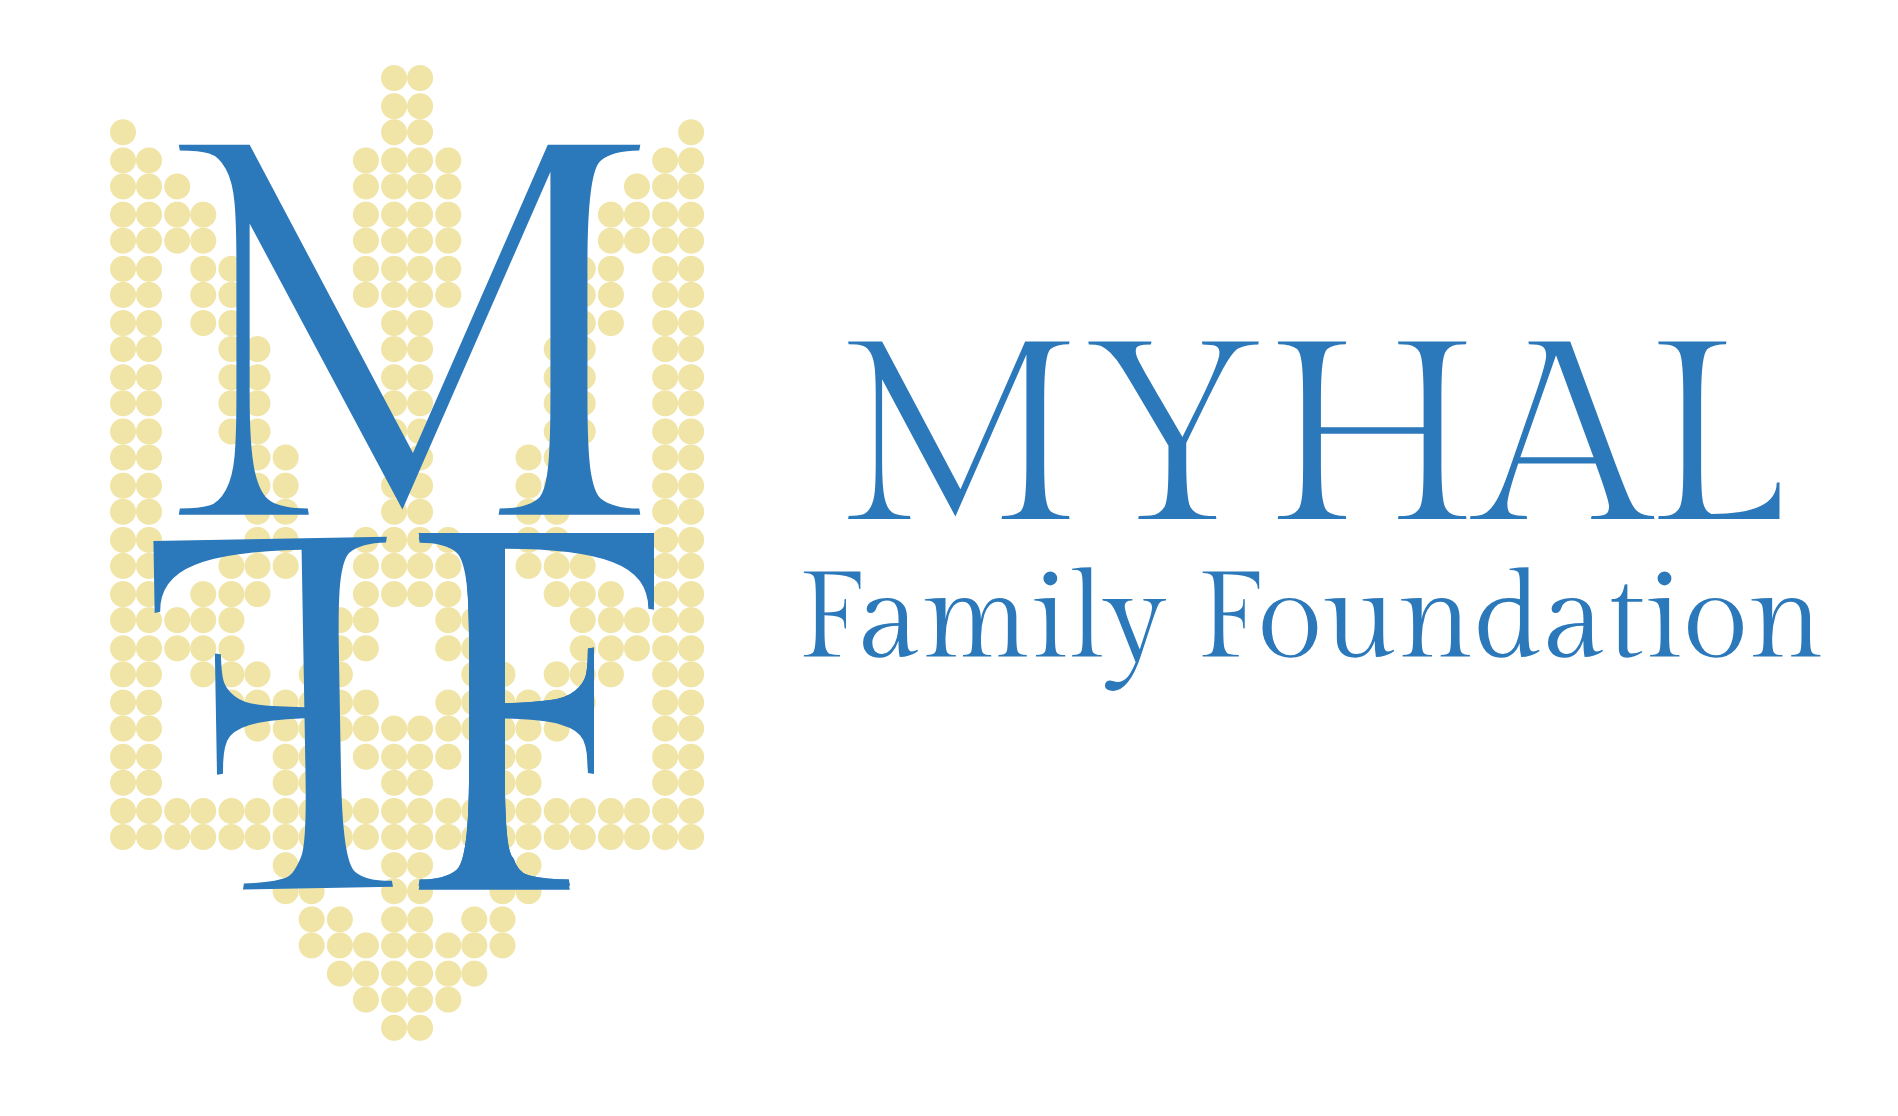 MYHAL Family Foundation